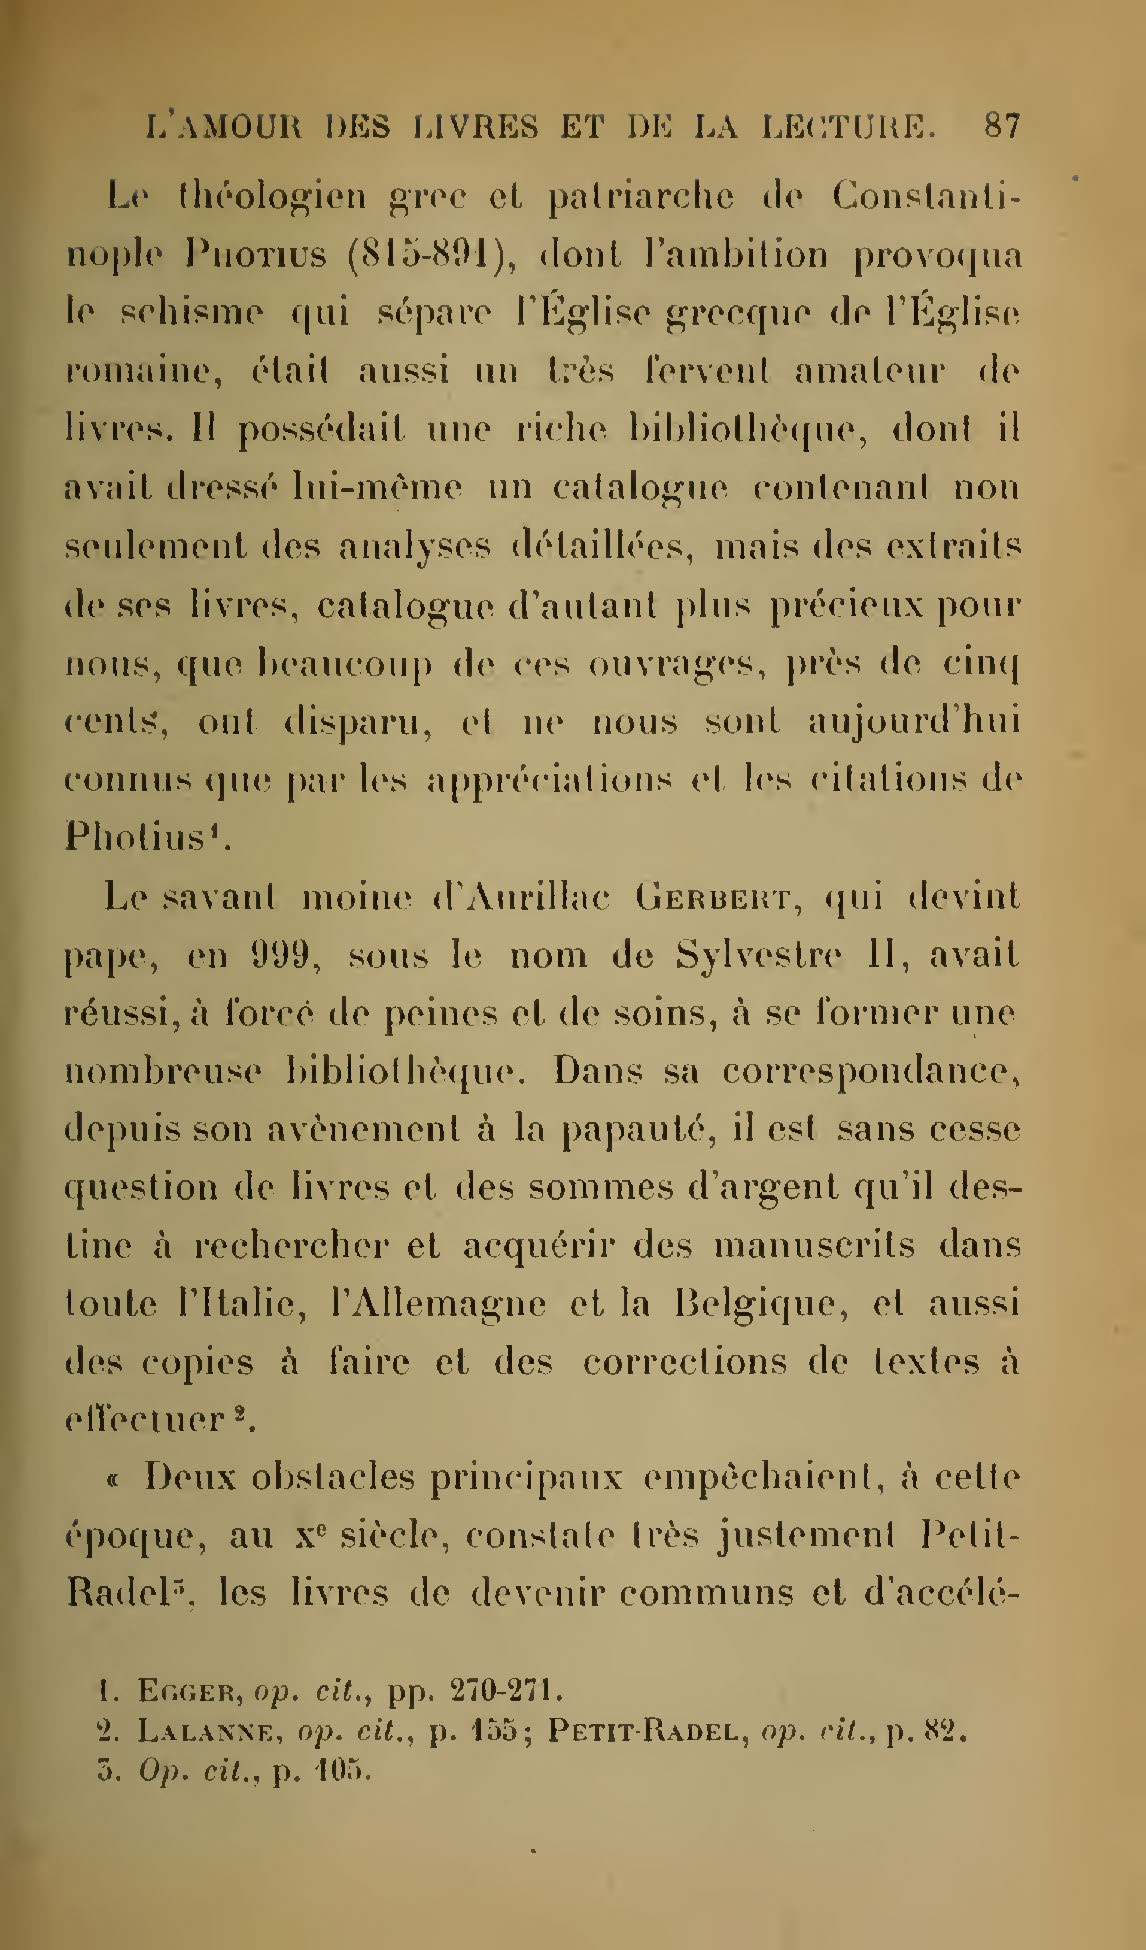 Albert Cim, Le Livre, t. I, p. 87.